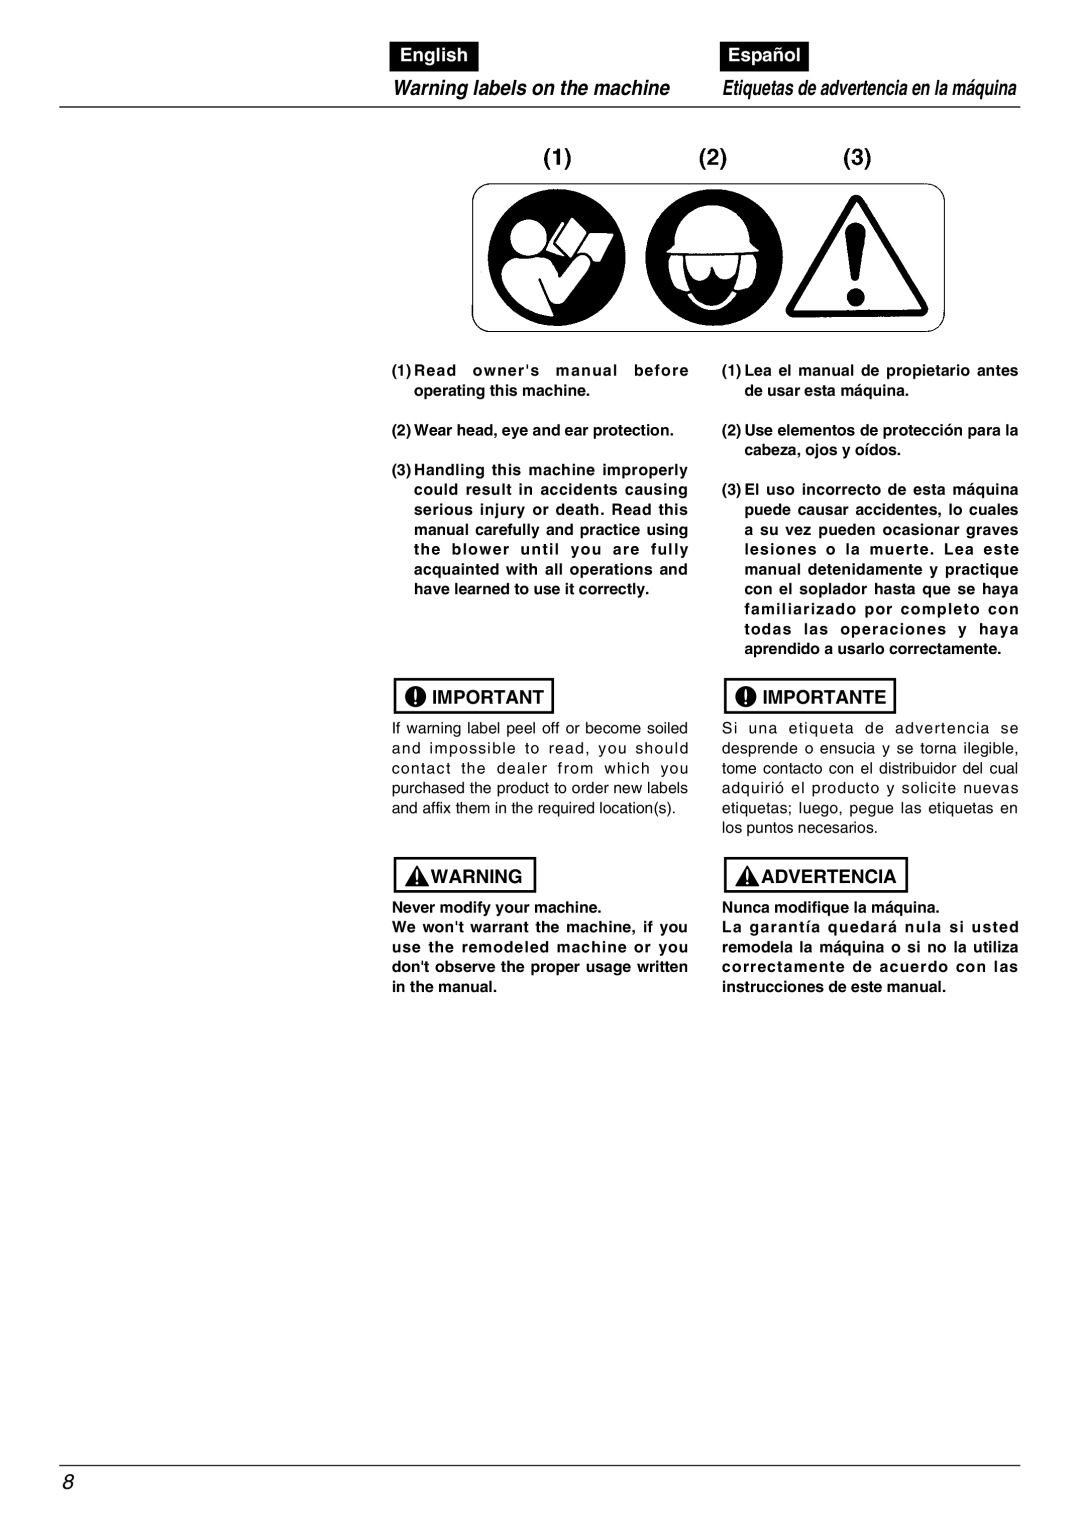 RedMax EBZ5000RH manual Warning labels on the machine, English, Español, Importante, Advertencia 